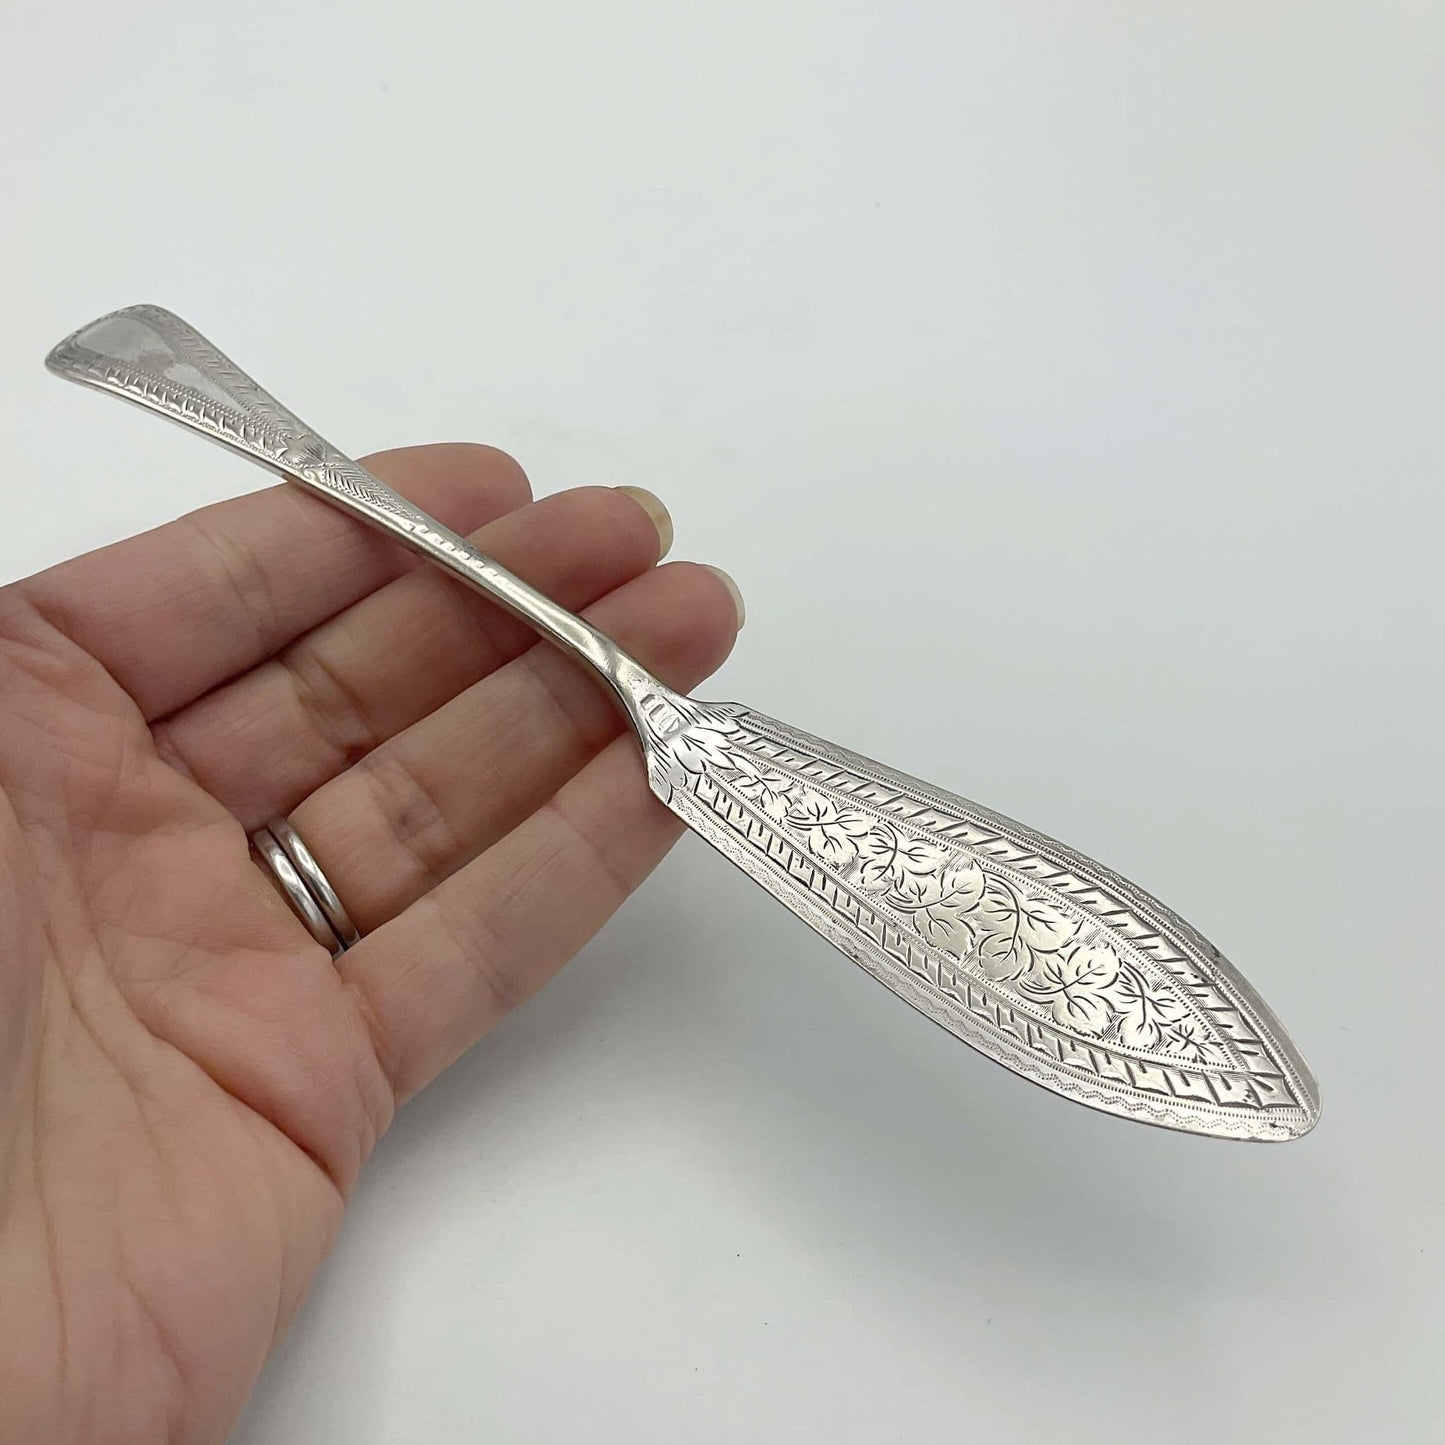 Antique Silver Plated Butter Knife, Butter Spreader